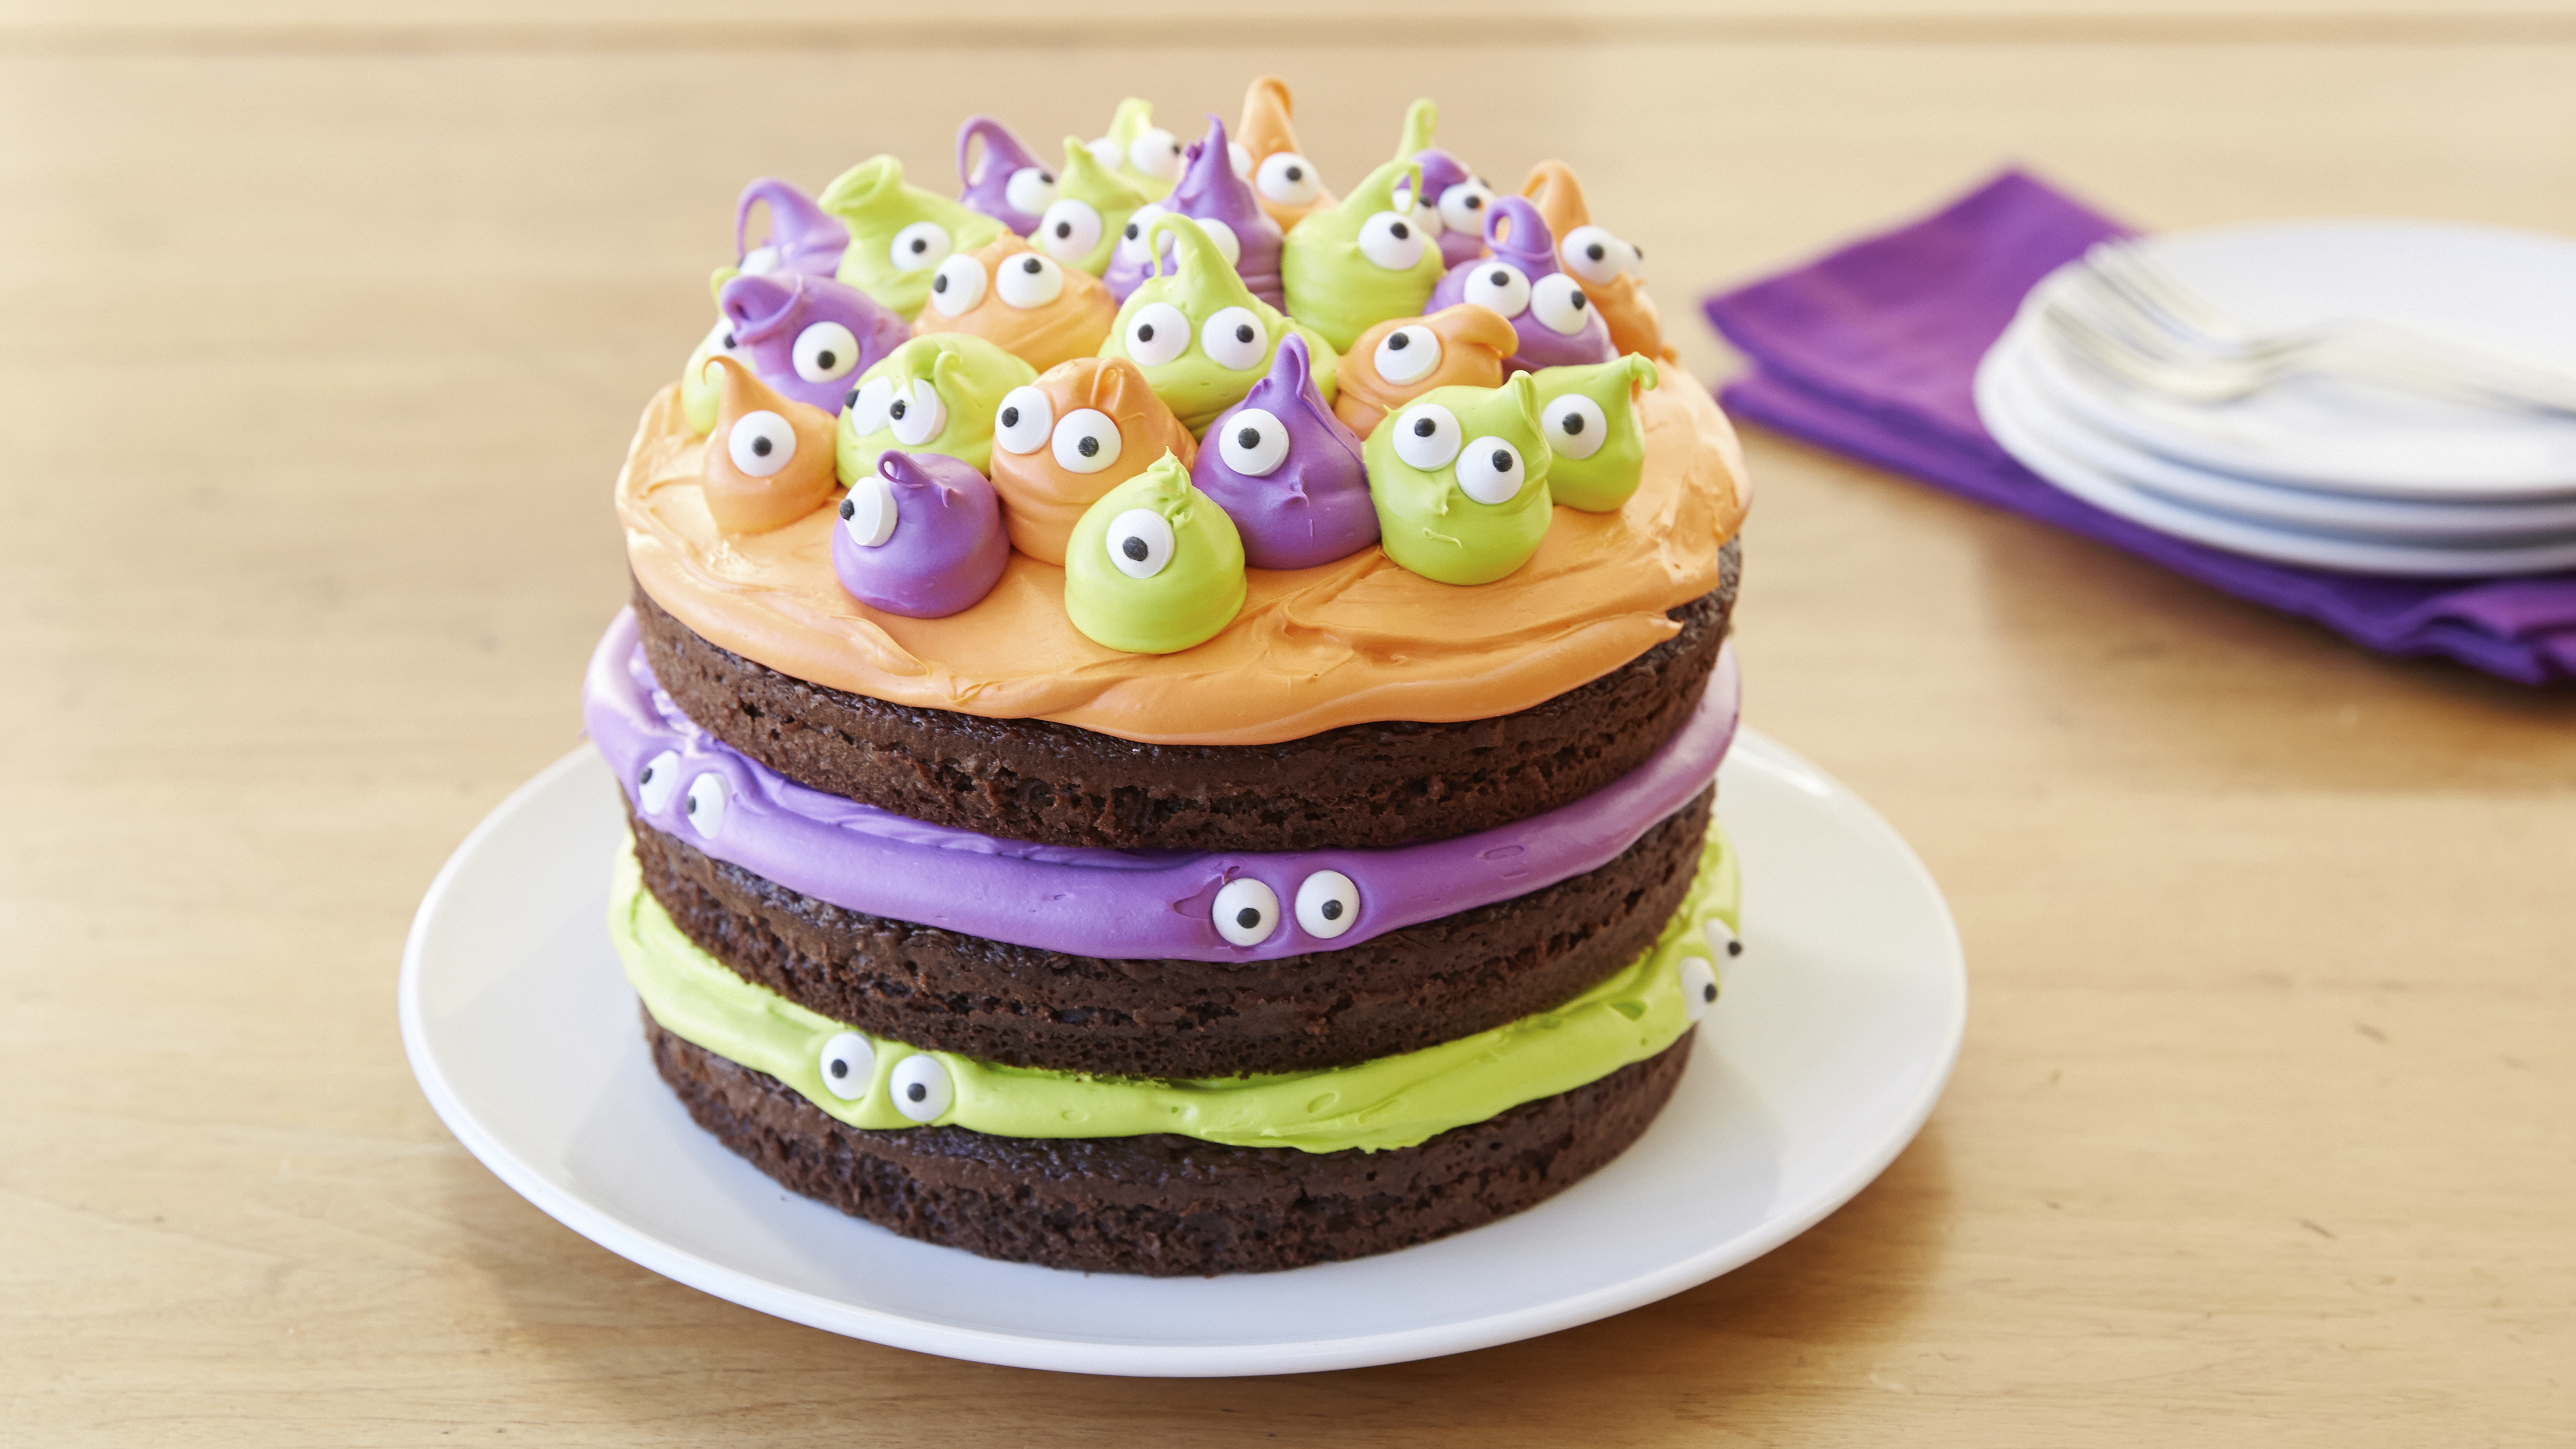 Beetlejuice Extravaganza: Crafting a Creepy-Cute Halloween Cake Deligh